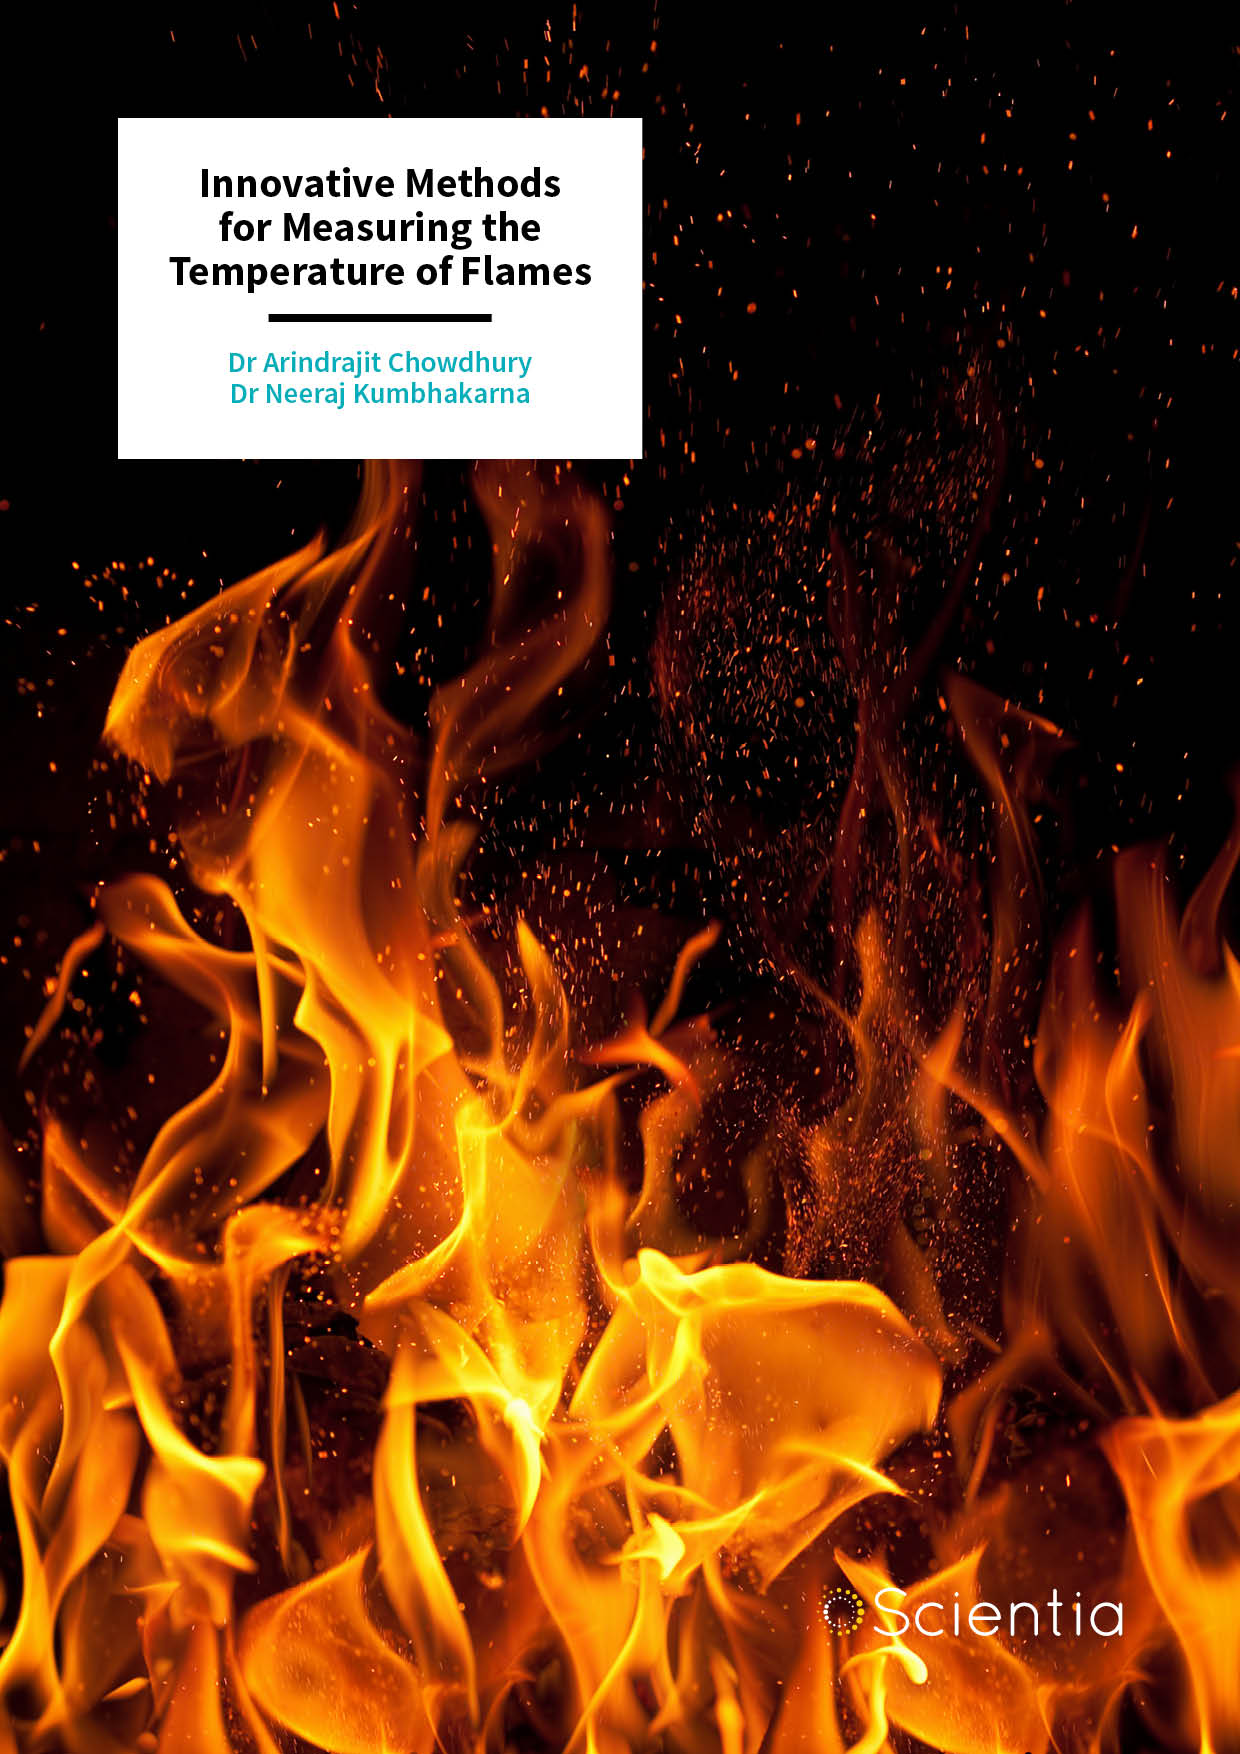 Dr Arindrajit Chowdhury | Dr Neeraj Kumbhakarna – Innovative Methods for Measuring the Temperature of Flames